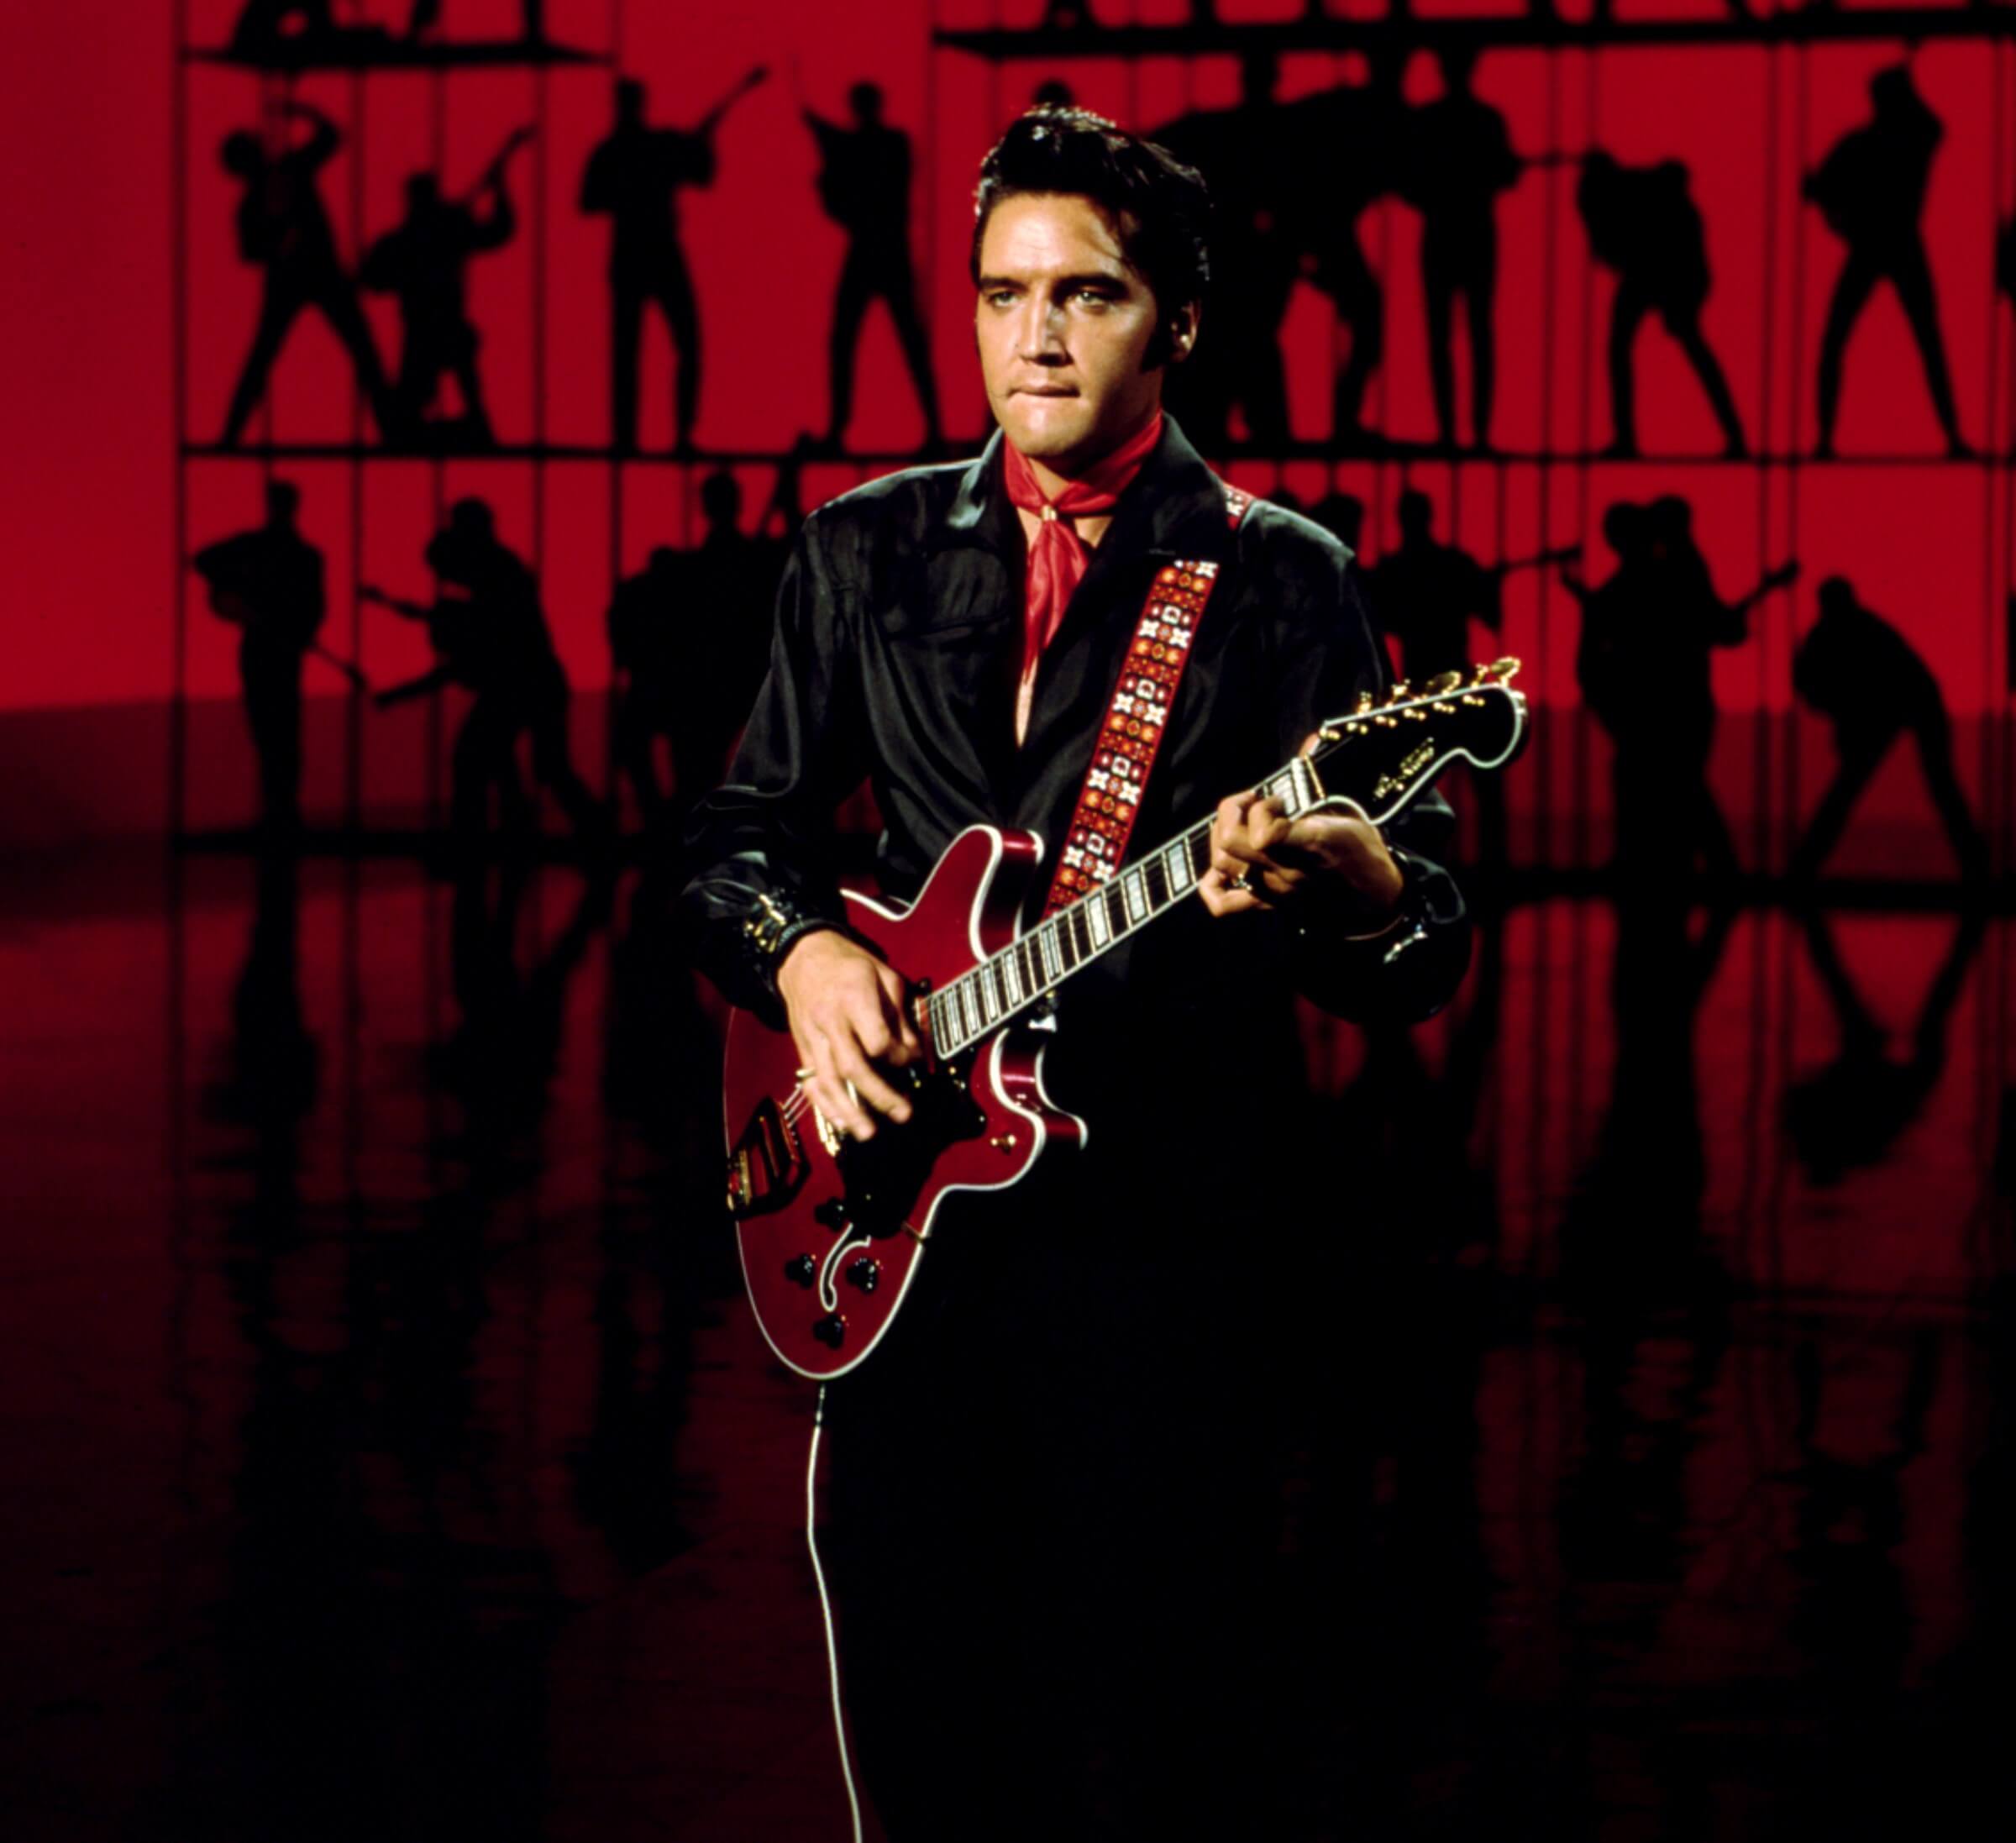 Elvis Presley with a guitar